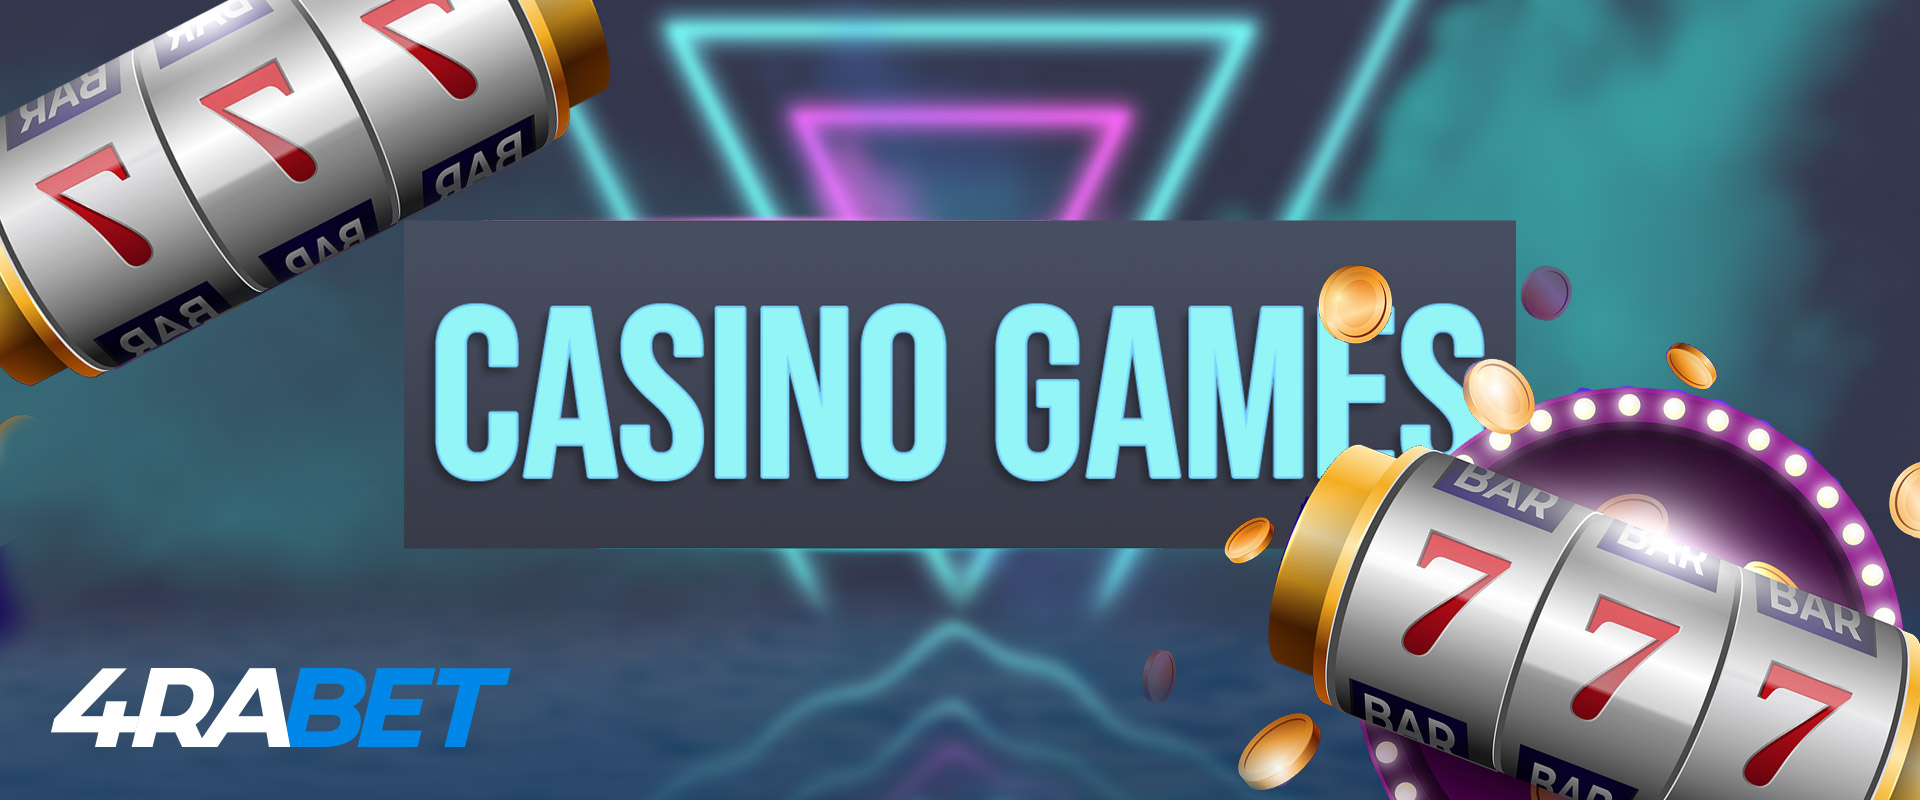 Casino games types.